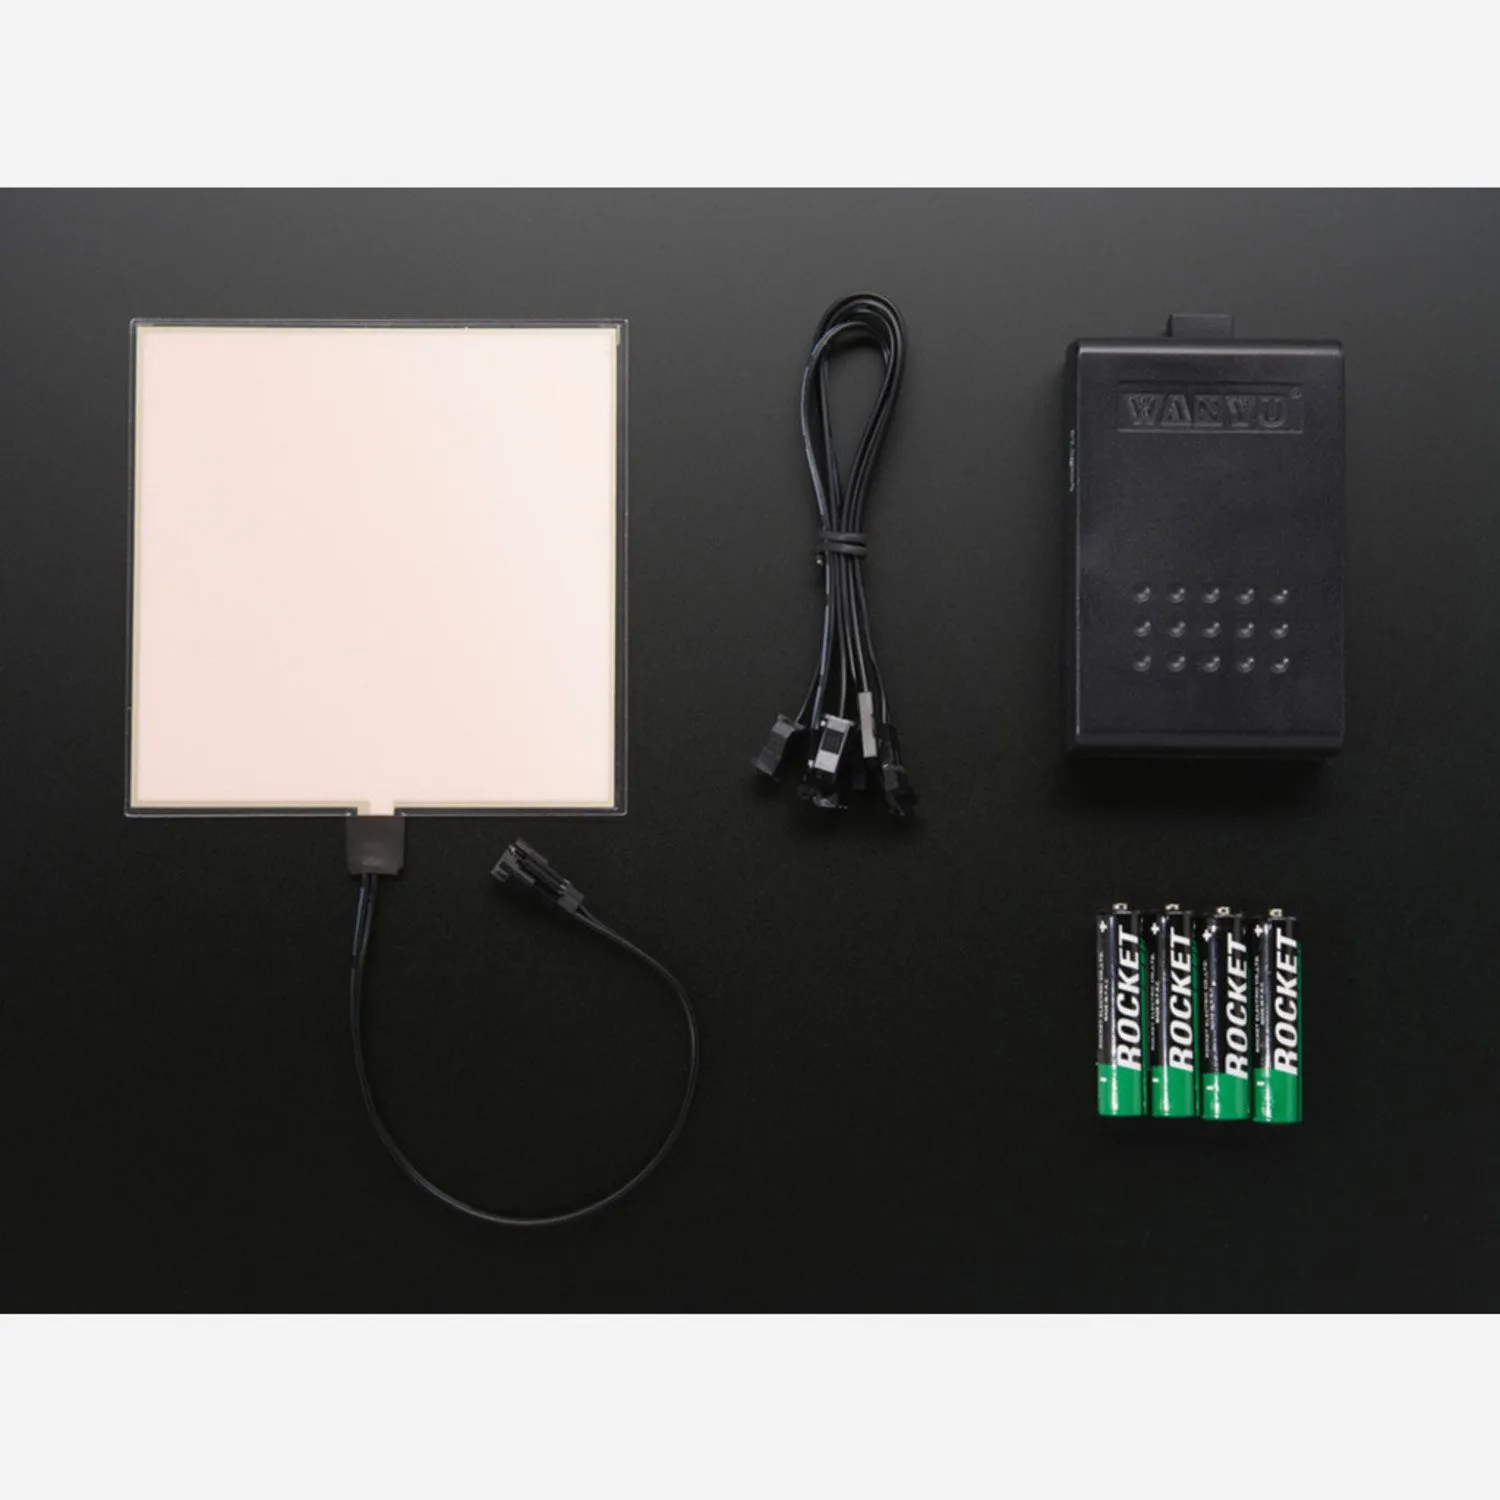 Photo of Electroluminescent (EL) Panel Starter Pack - 10cm x 10cm White